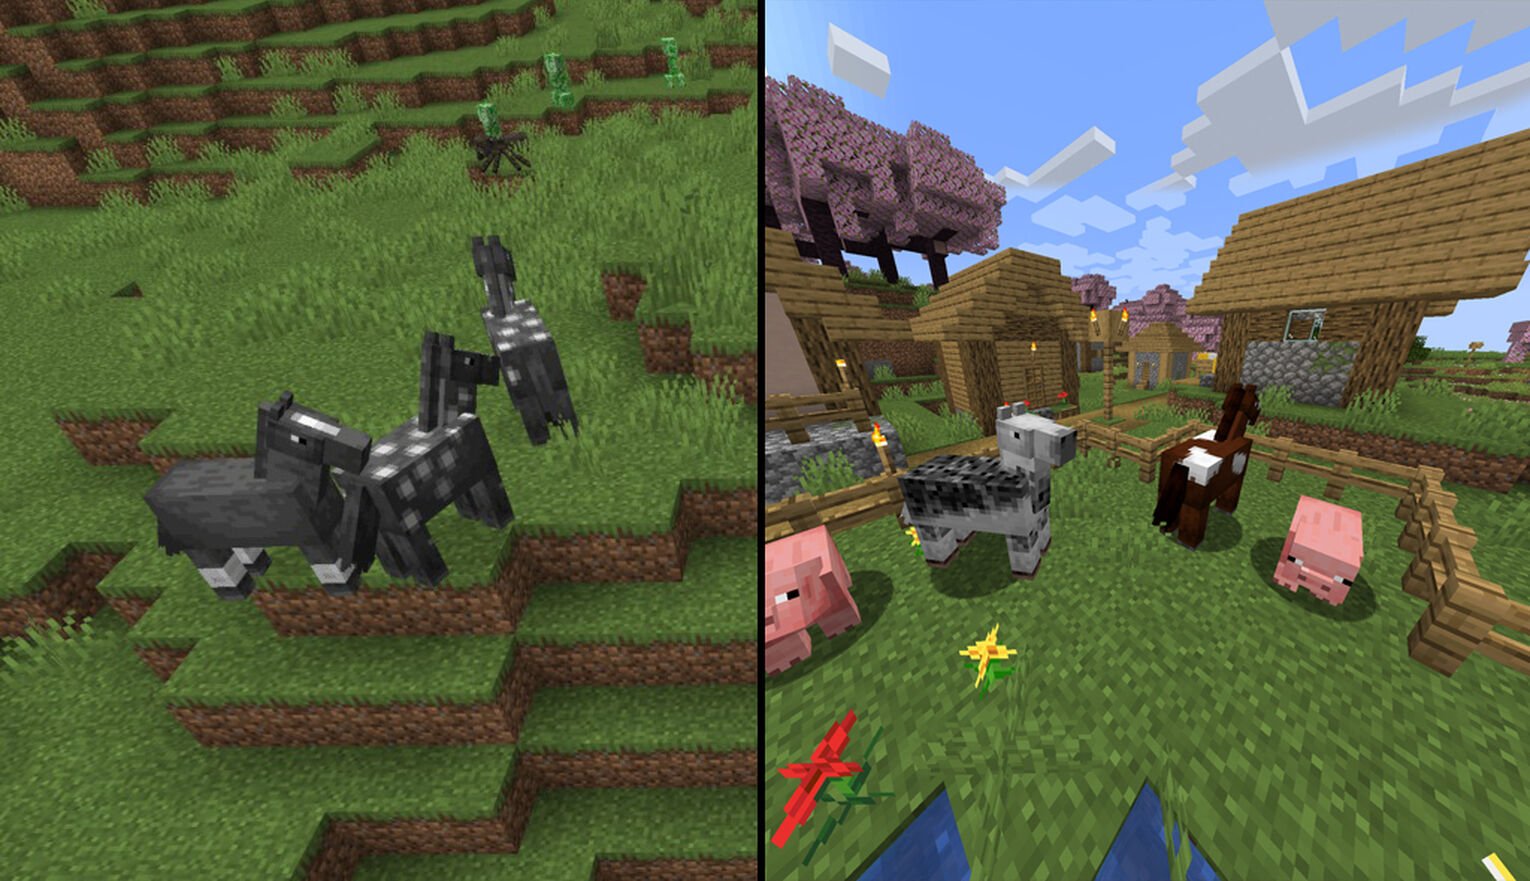 Minecraft Horse Spawn in Biome and Village